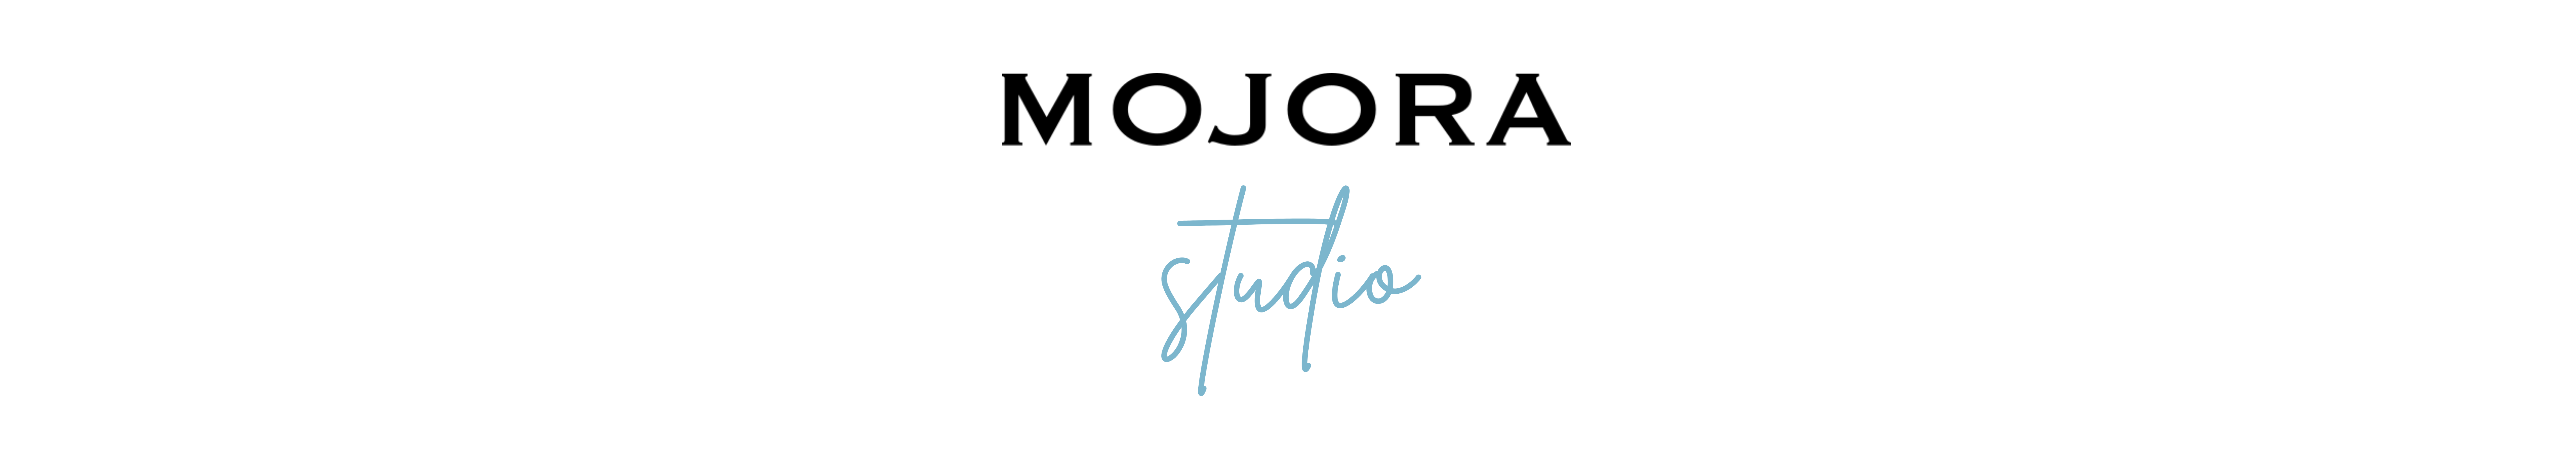 MOJORA studio